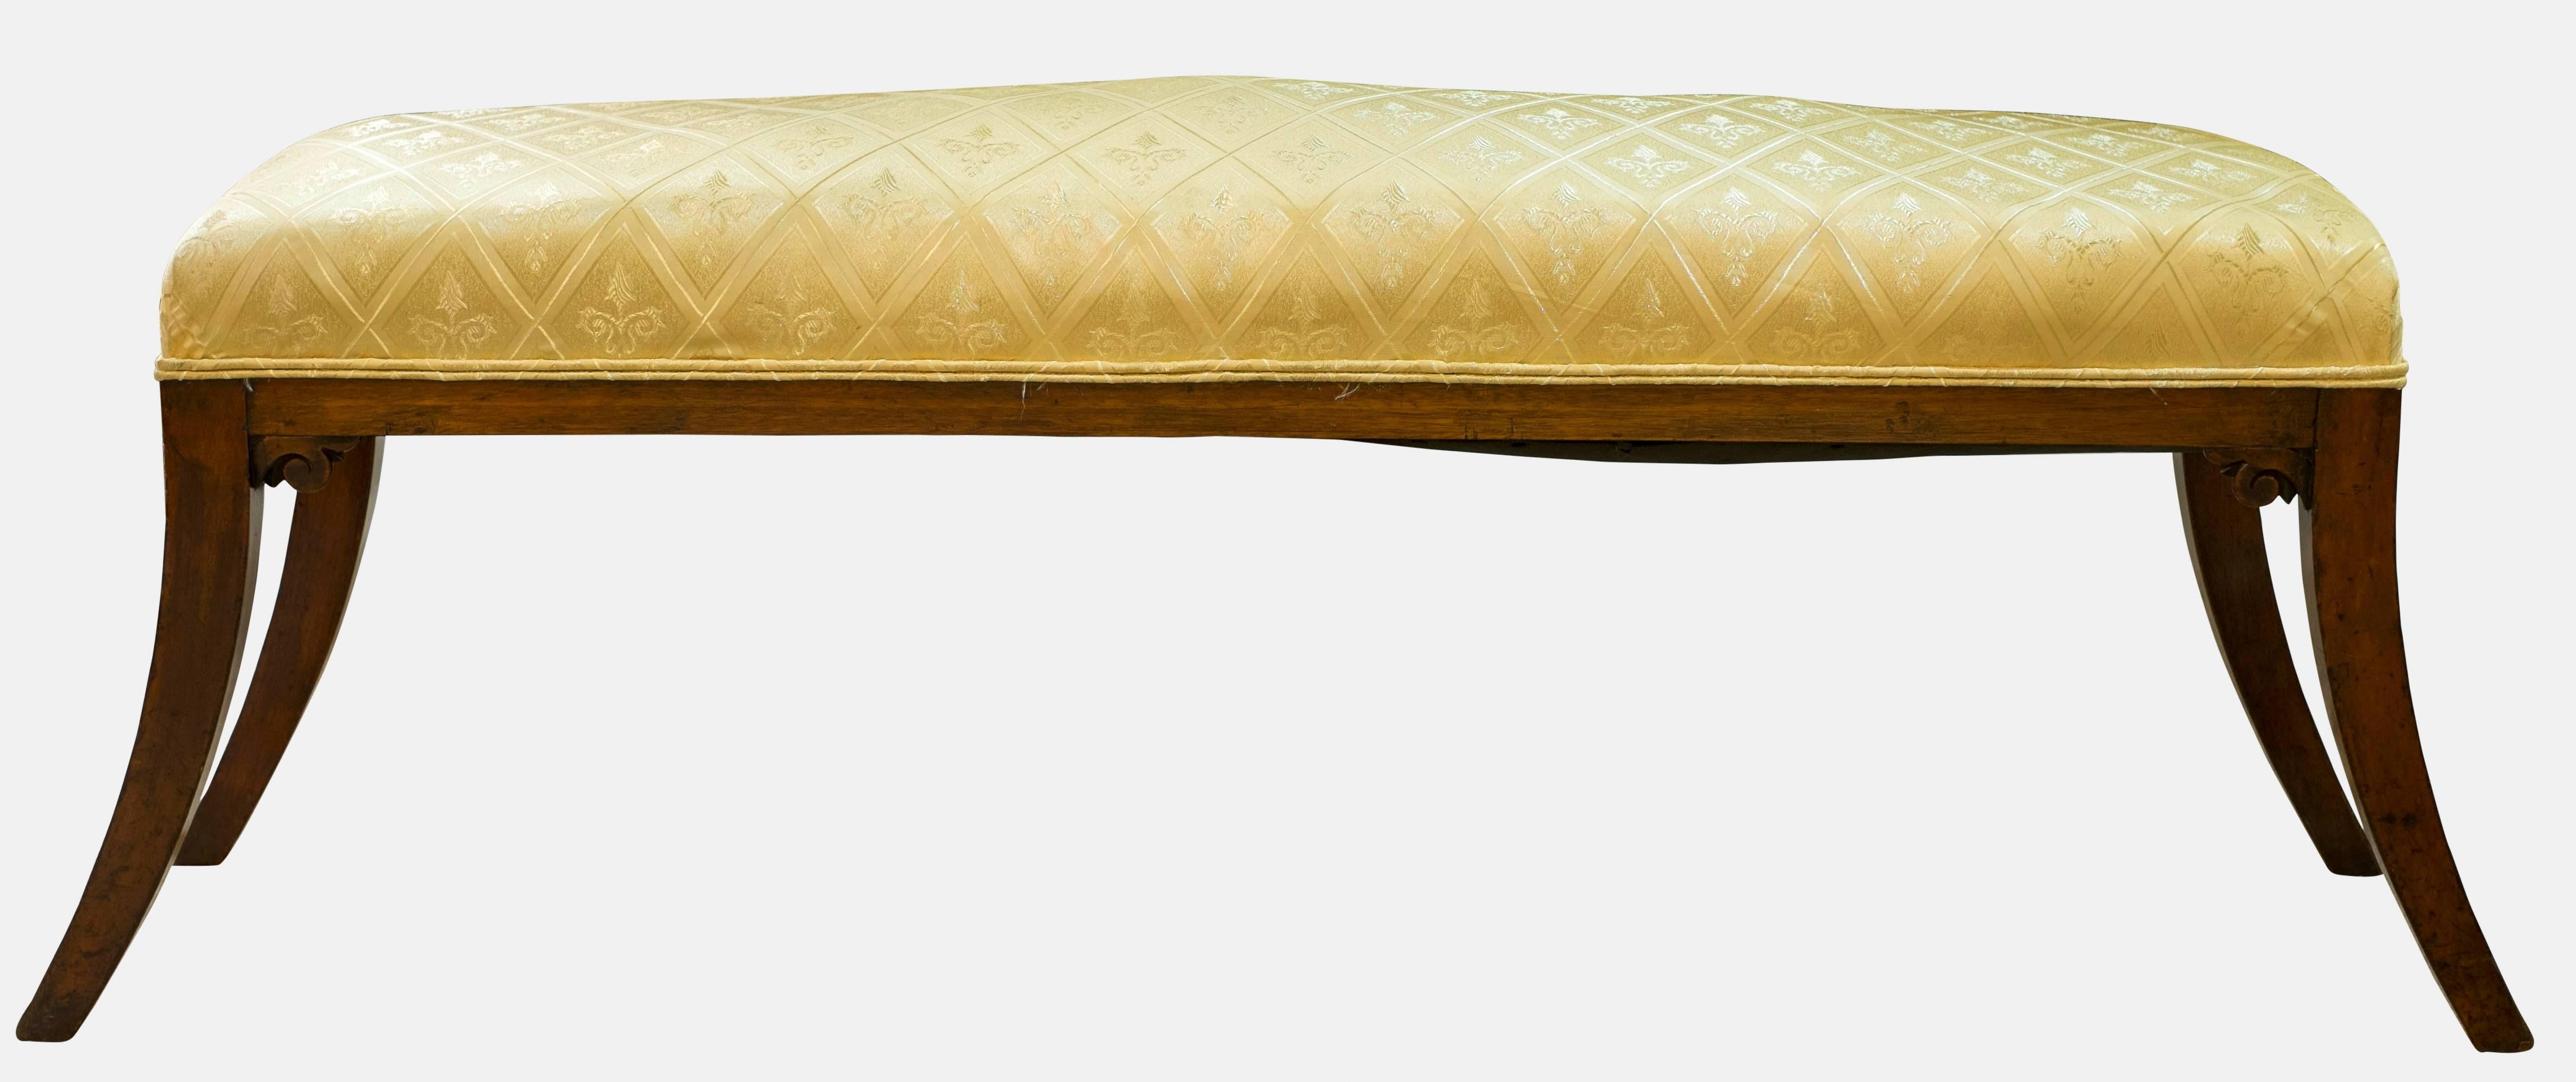 An elegant pair of mahogany late 19th century window seats.

Measures: 47cm (18.5